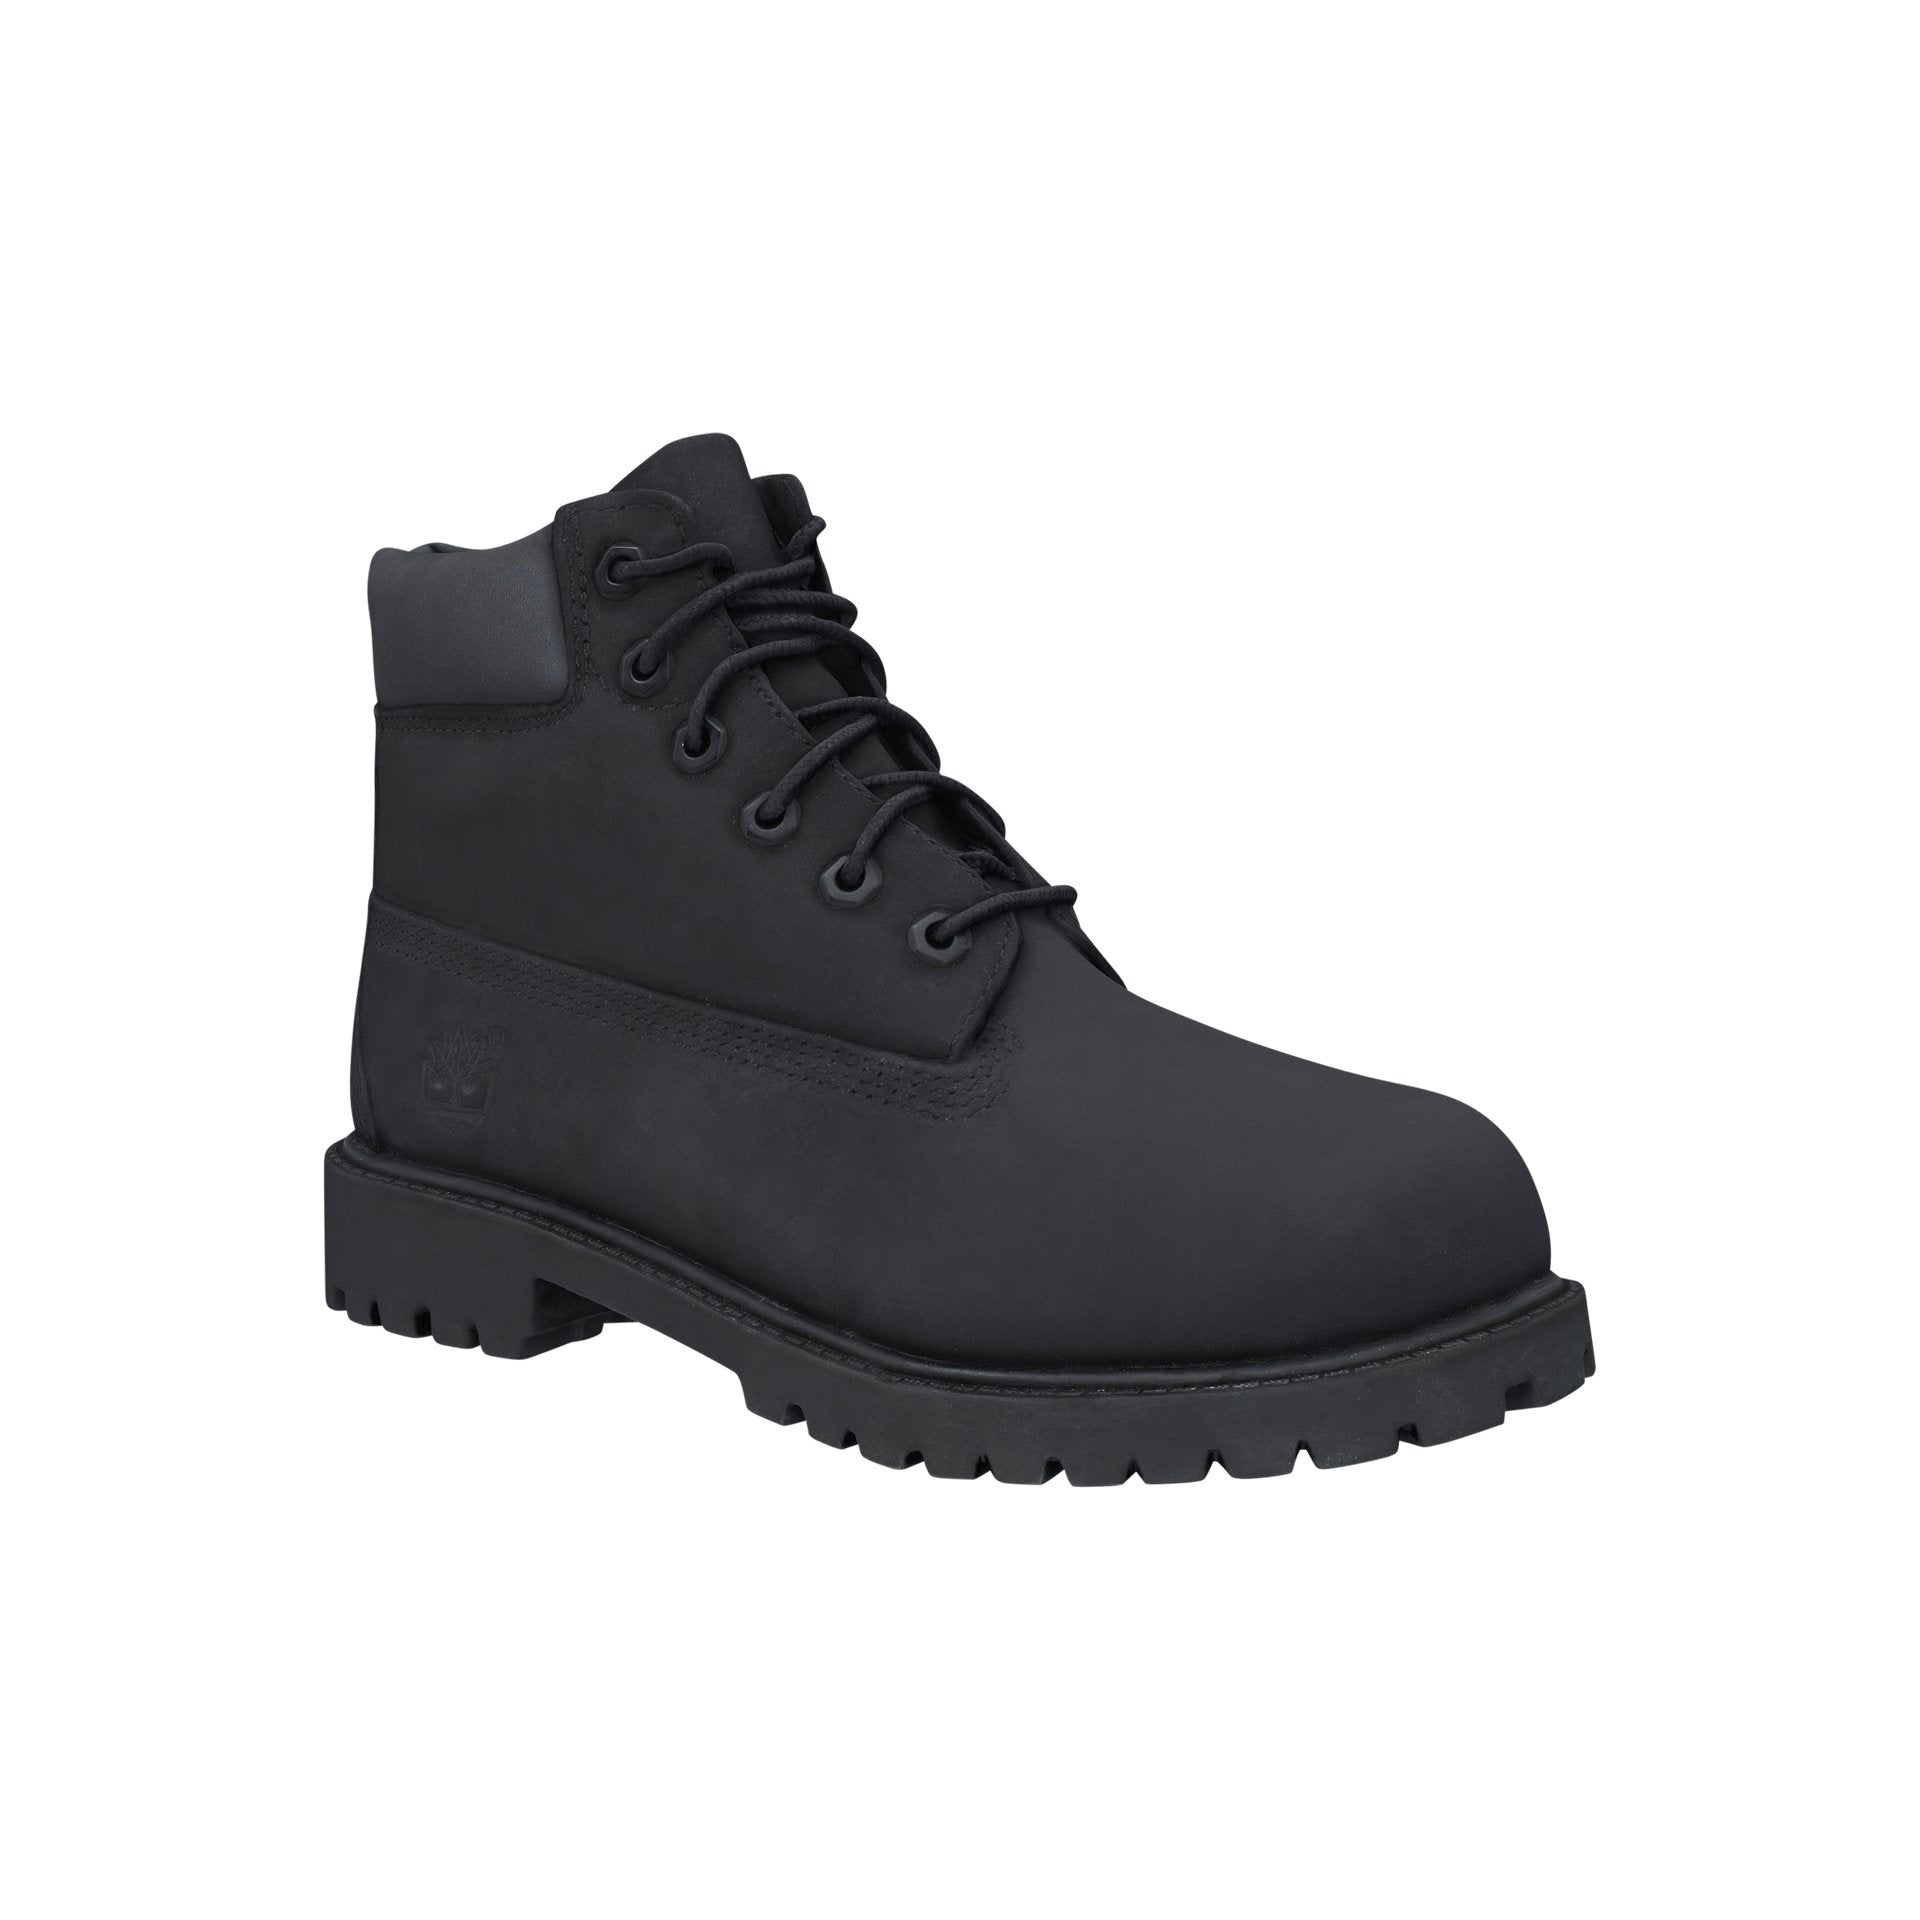 Timberland 6 Inch Premium Black Waterproof Nubuck Leather Kids Boots